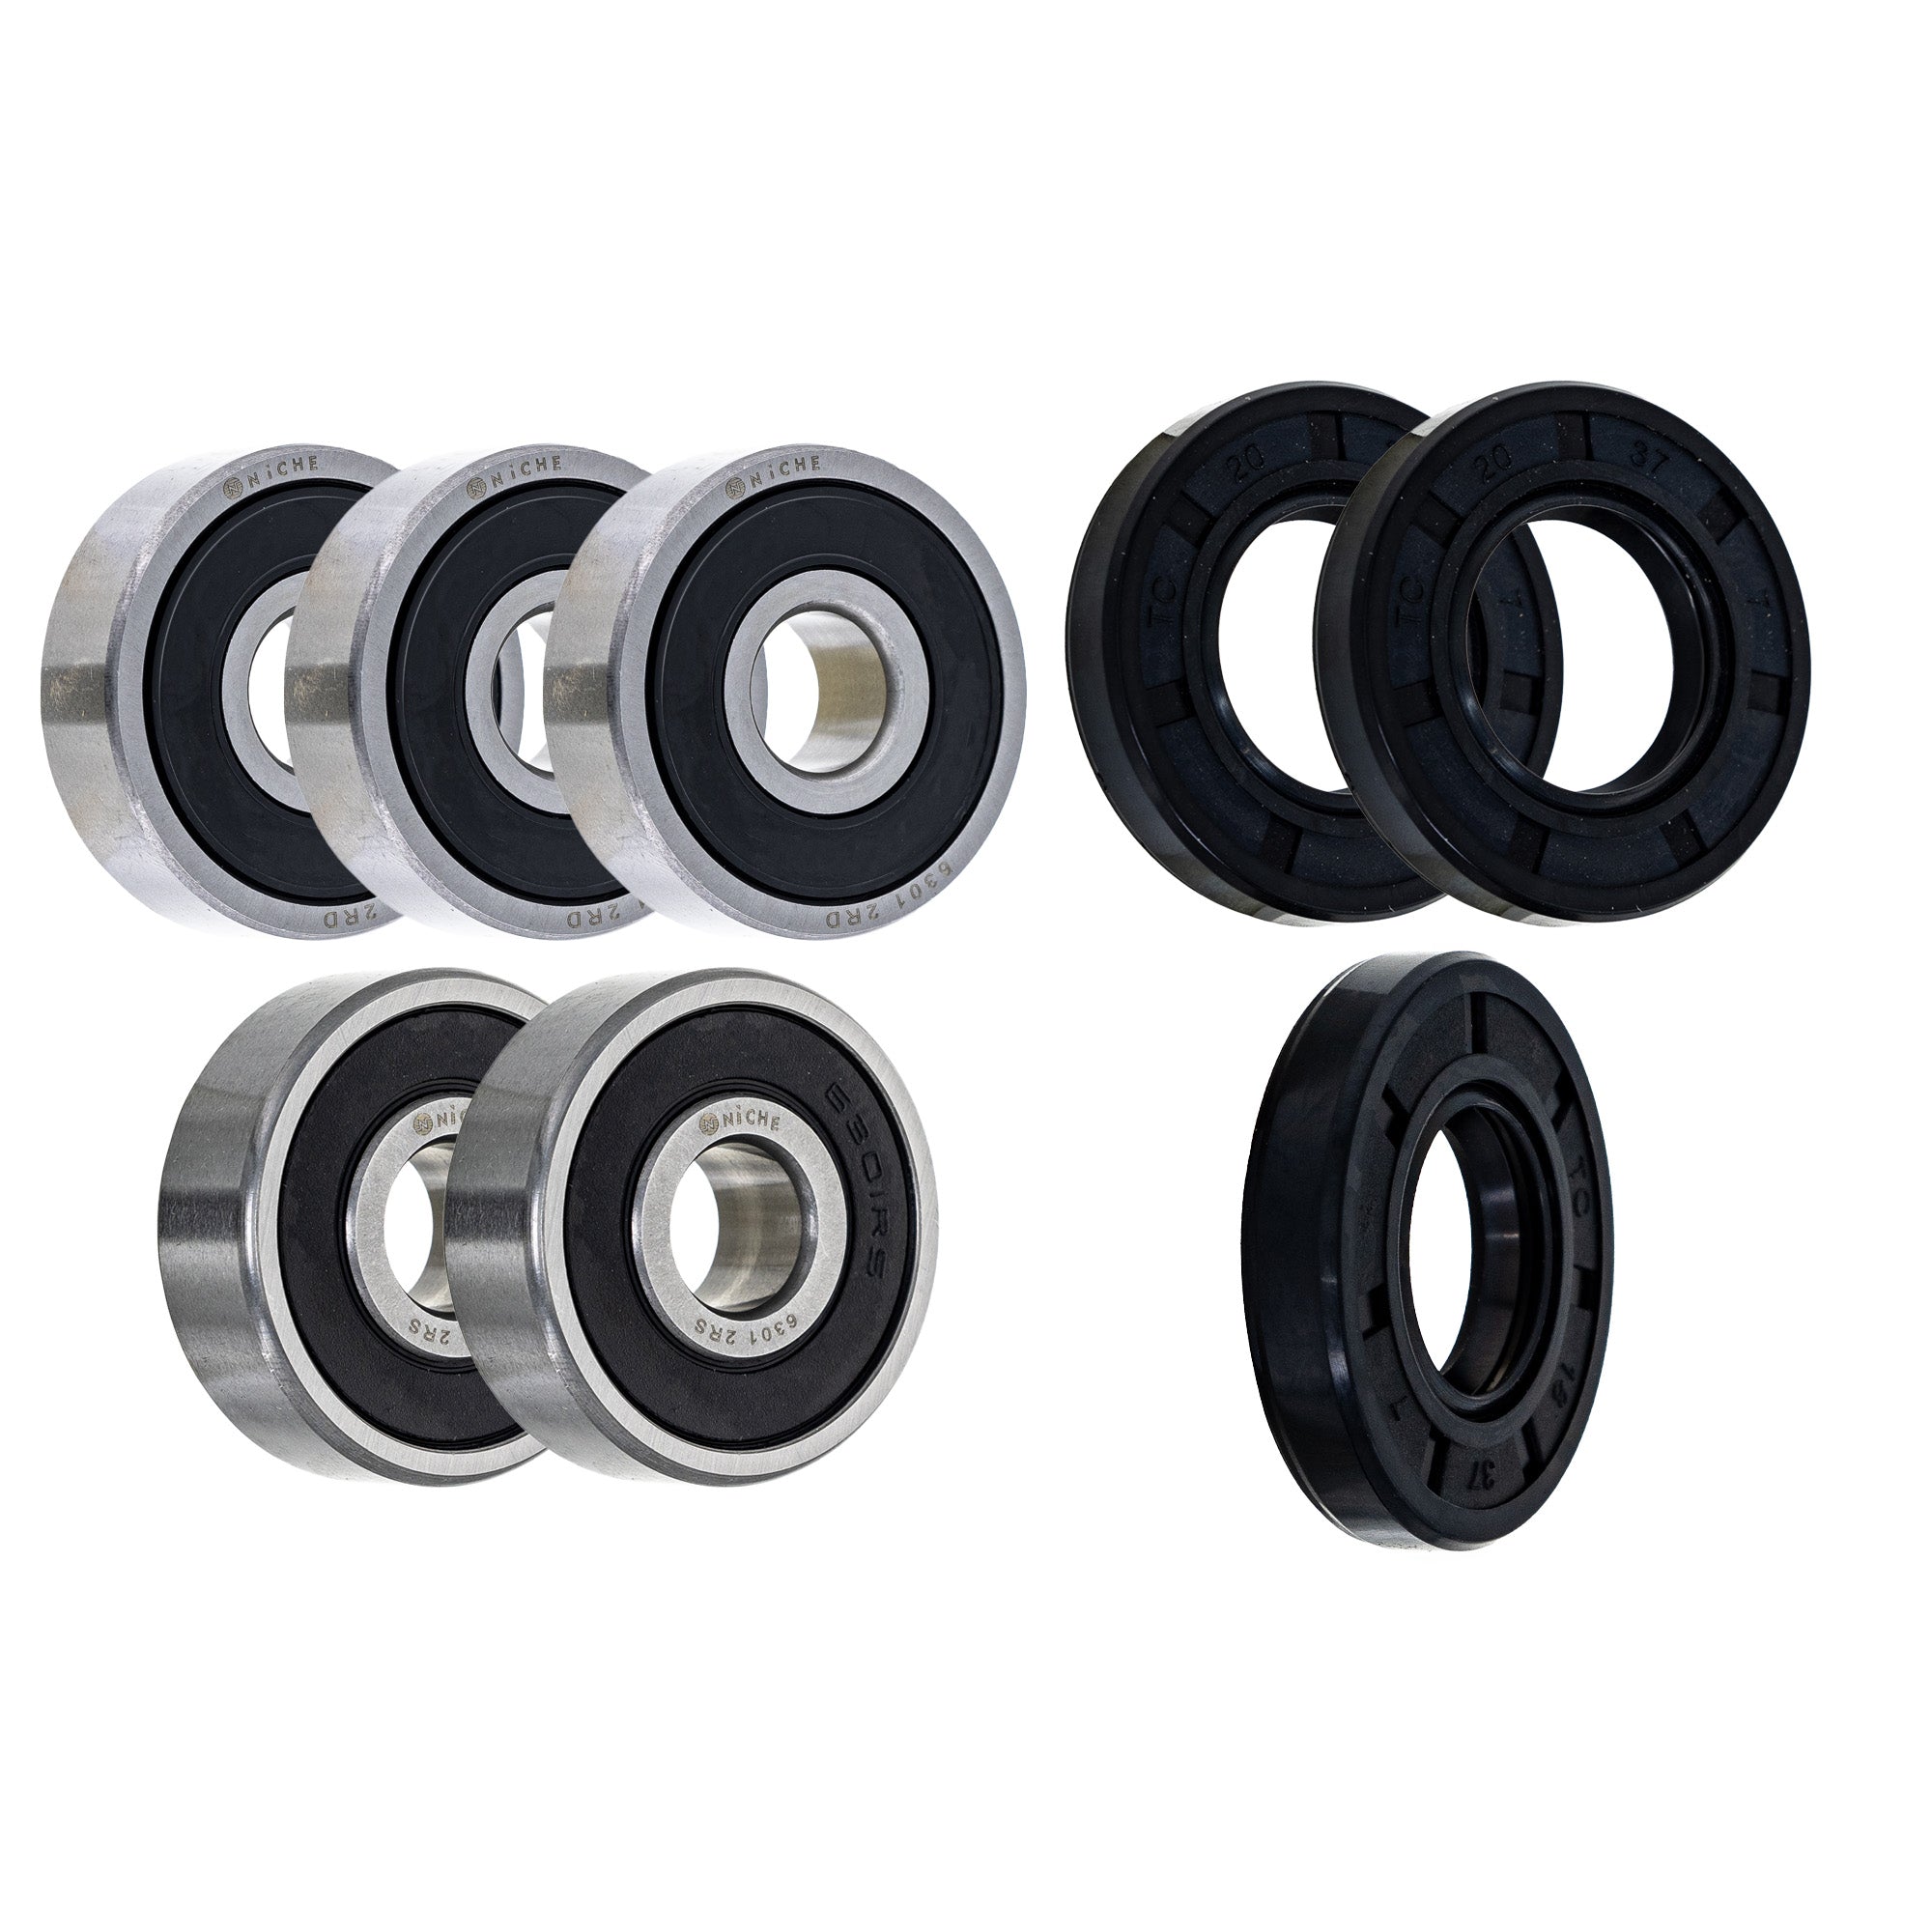 Wheel Bearing Seal Kit for zOTHER XR80R XR80 XR75 XR70R NICHE MK1008703